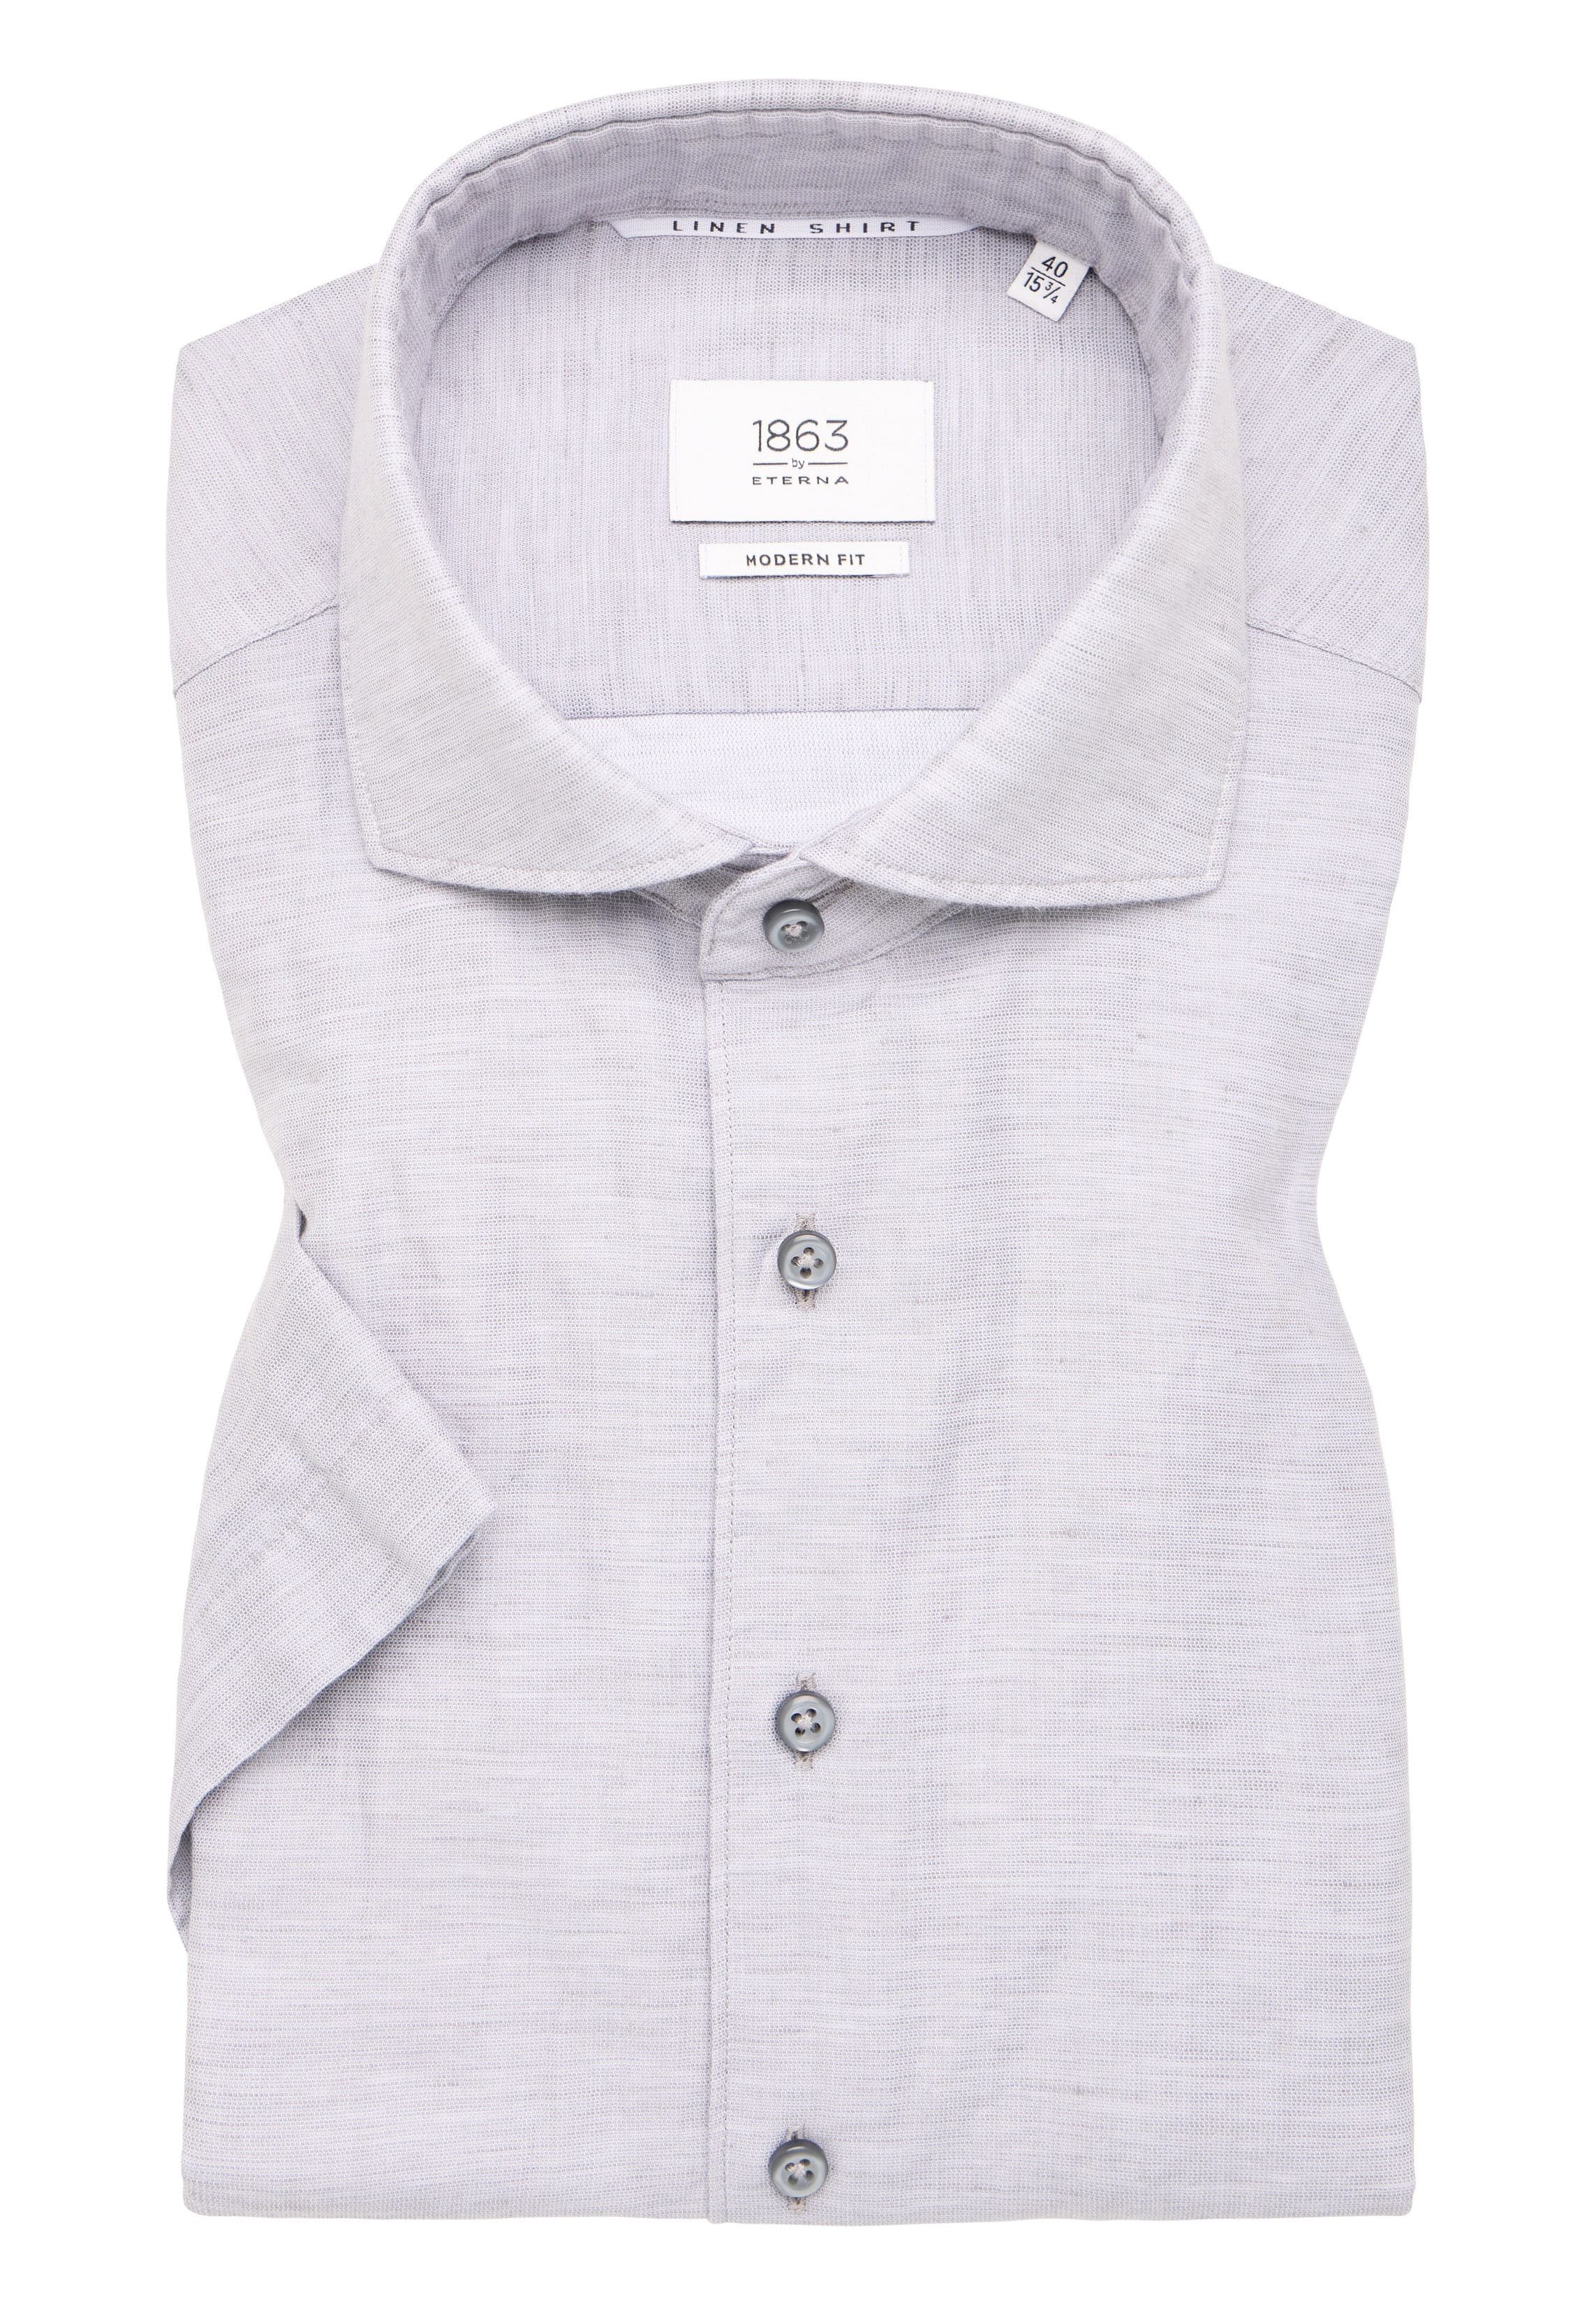 MODERN FIT Linen Shirt in grau unifarben